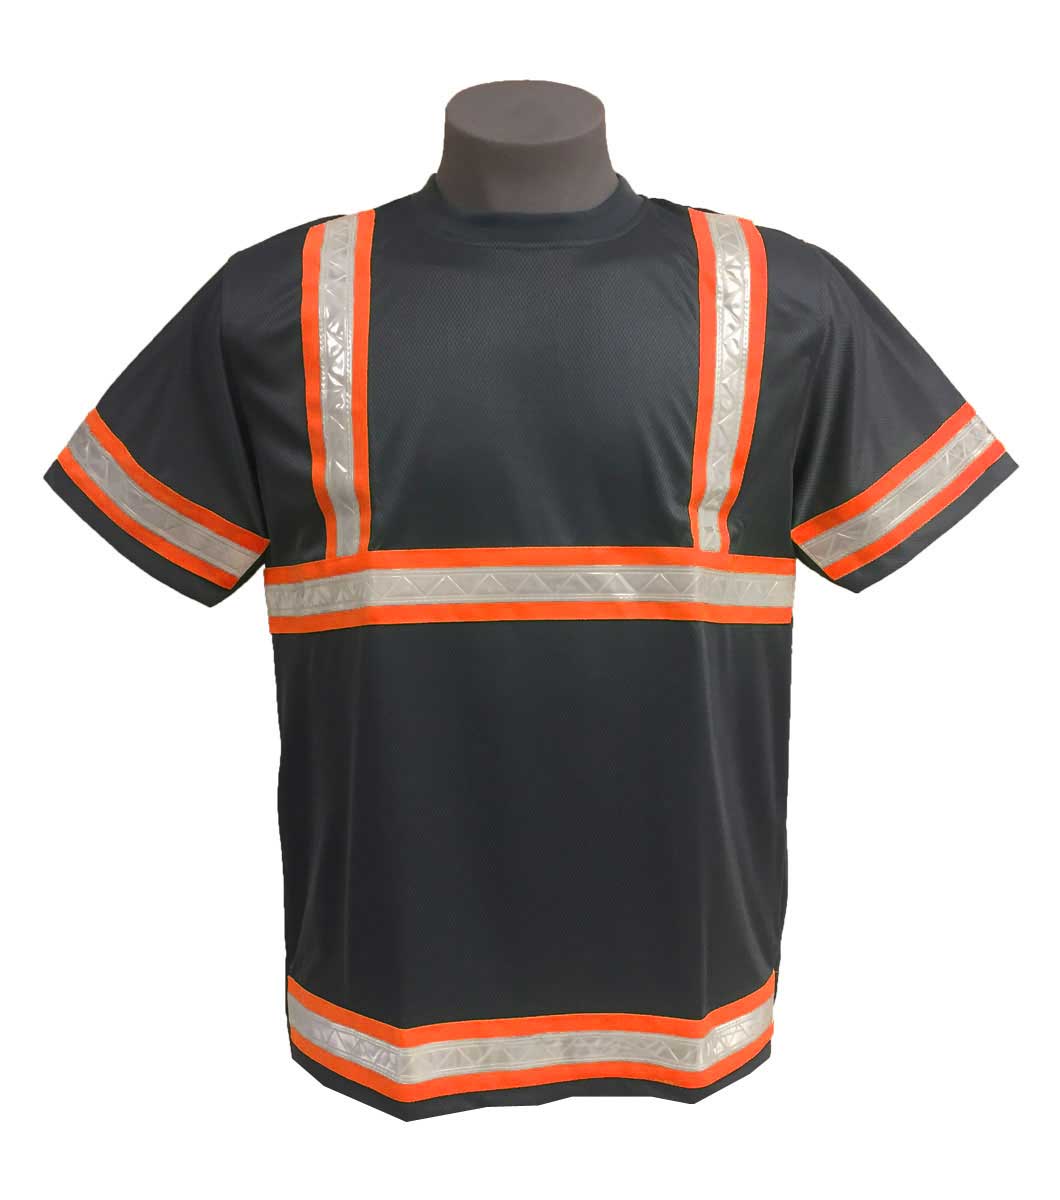 Incentex Safety Gear Men's Mesh Reflective T-Shirt